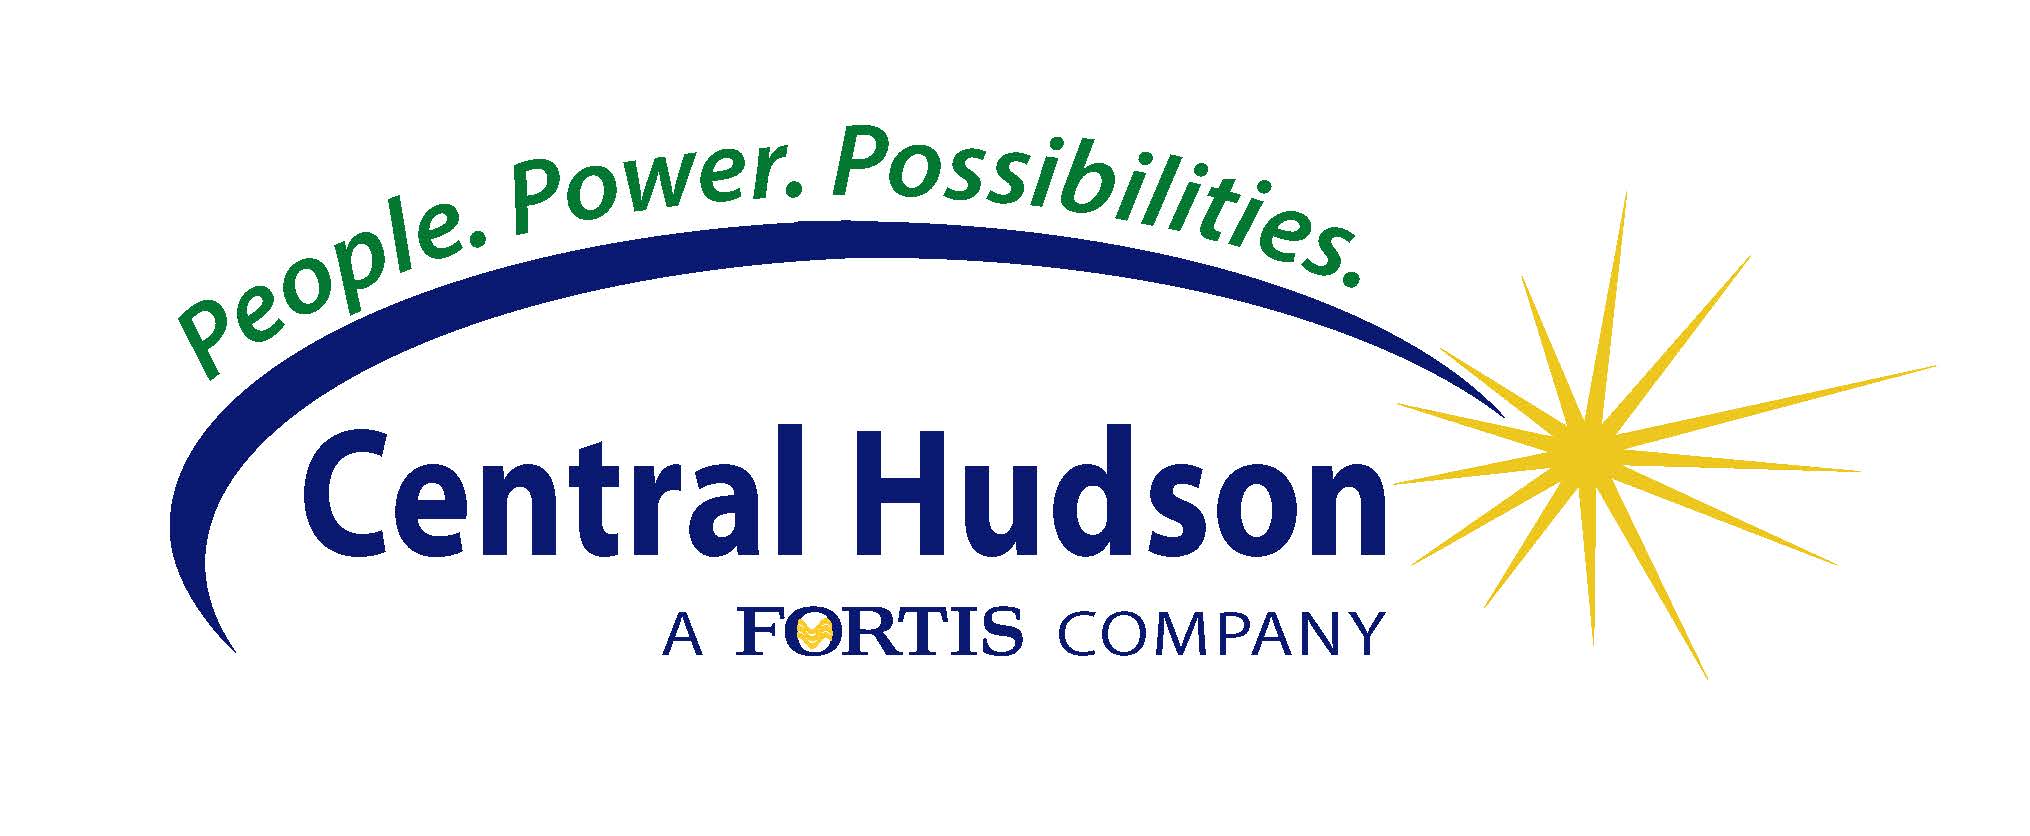 Central Hudson Logo 2014 Community Foundation of Orange and Sullivan